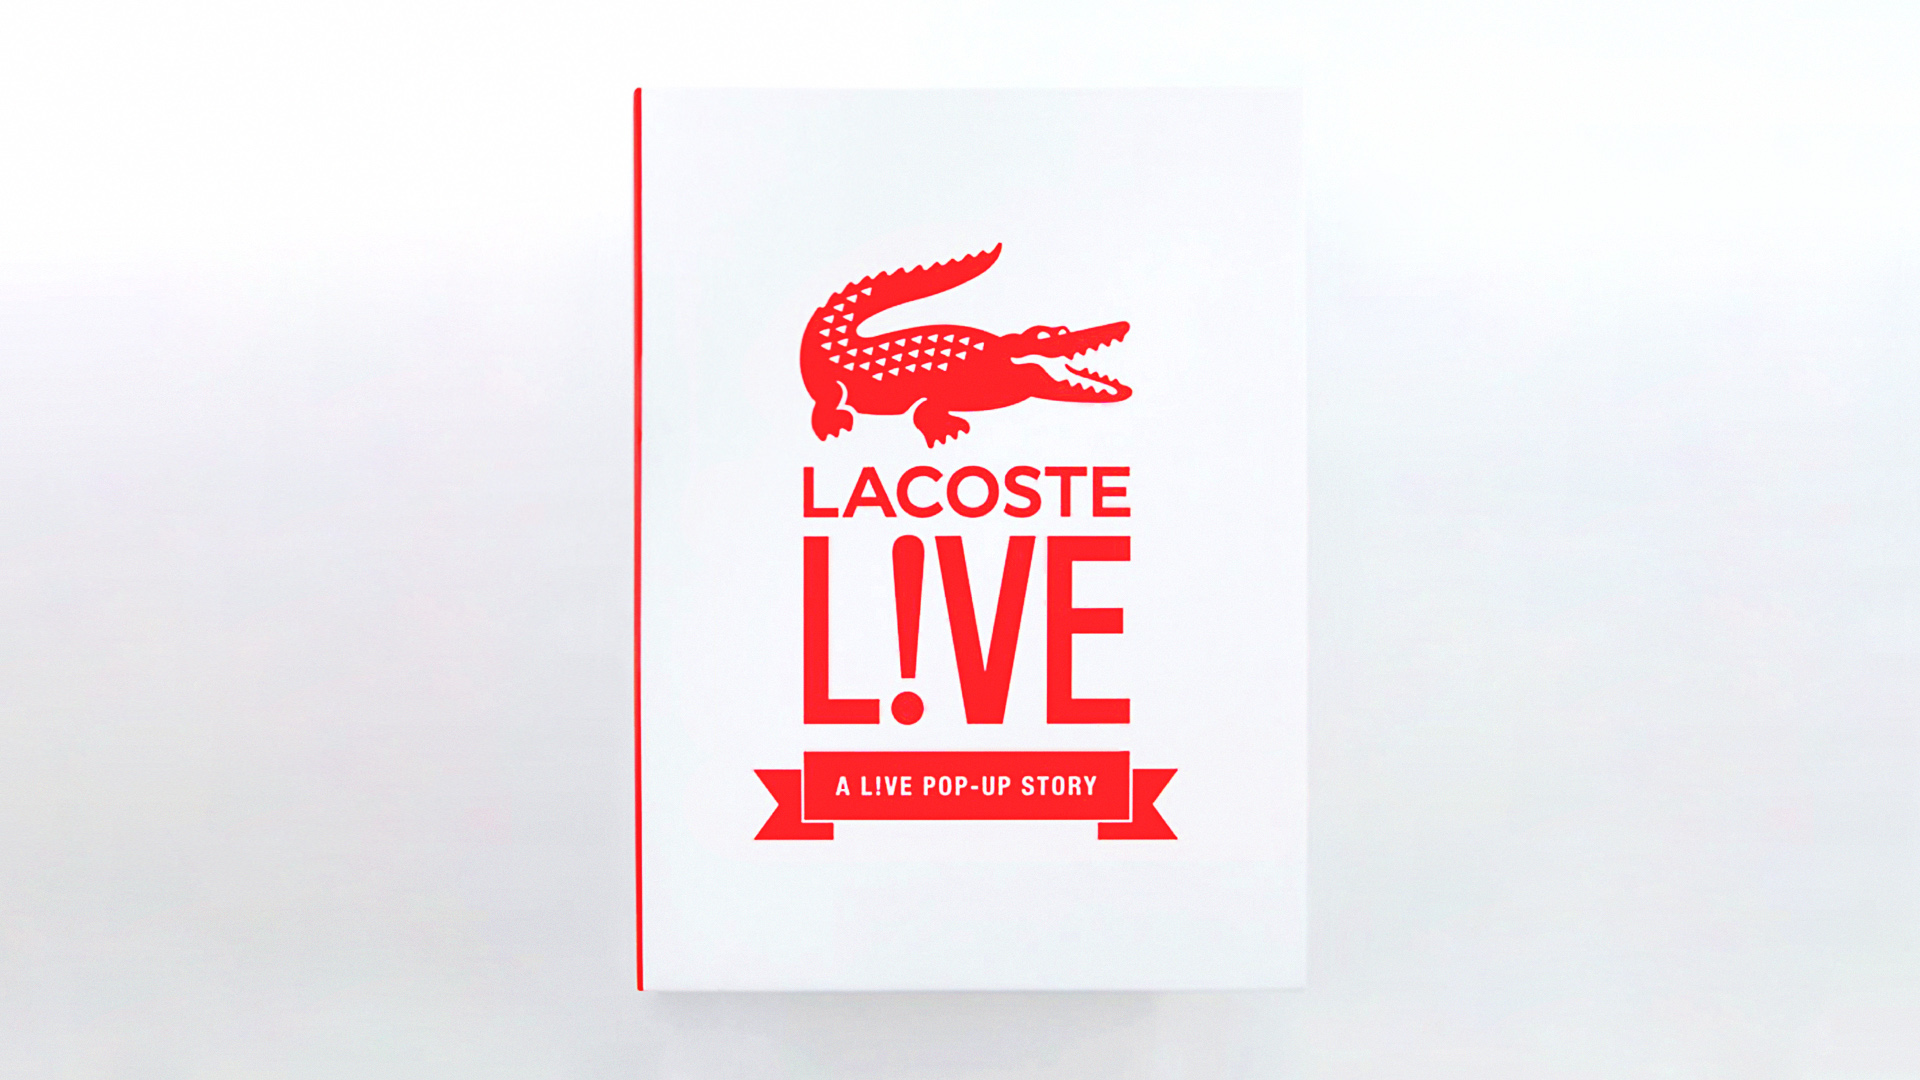 logo lacoste live